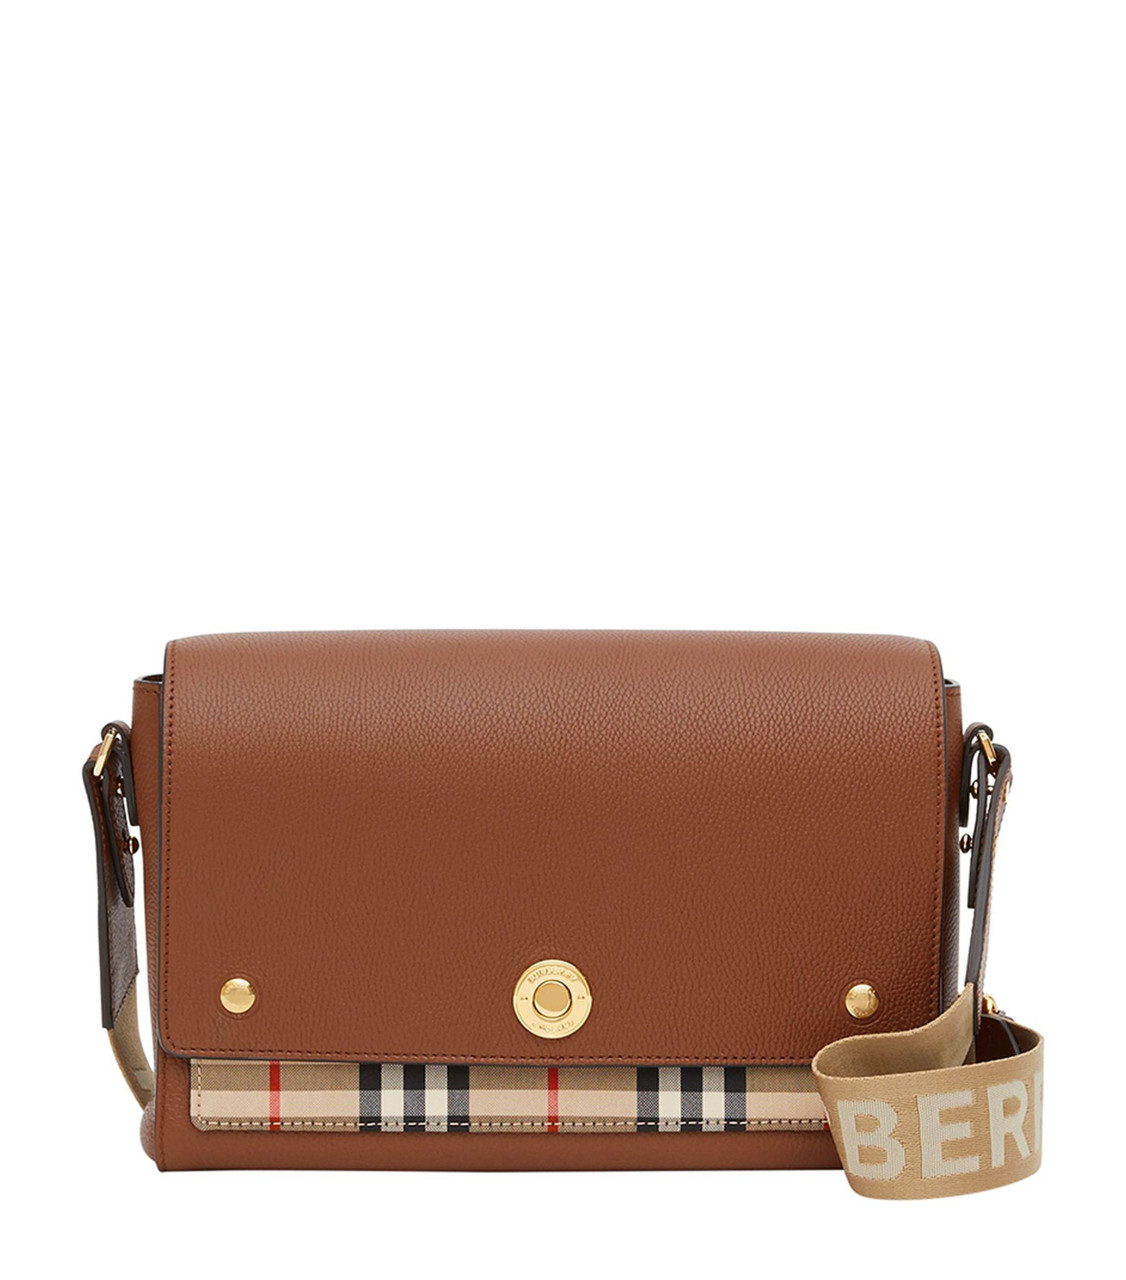 Burberry Alma Style Handbag | Satchel handbags, Handbag, Burberry handbags